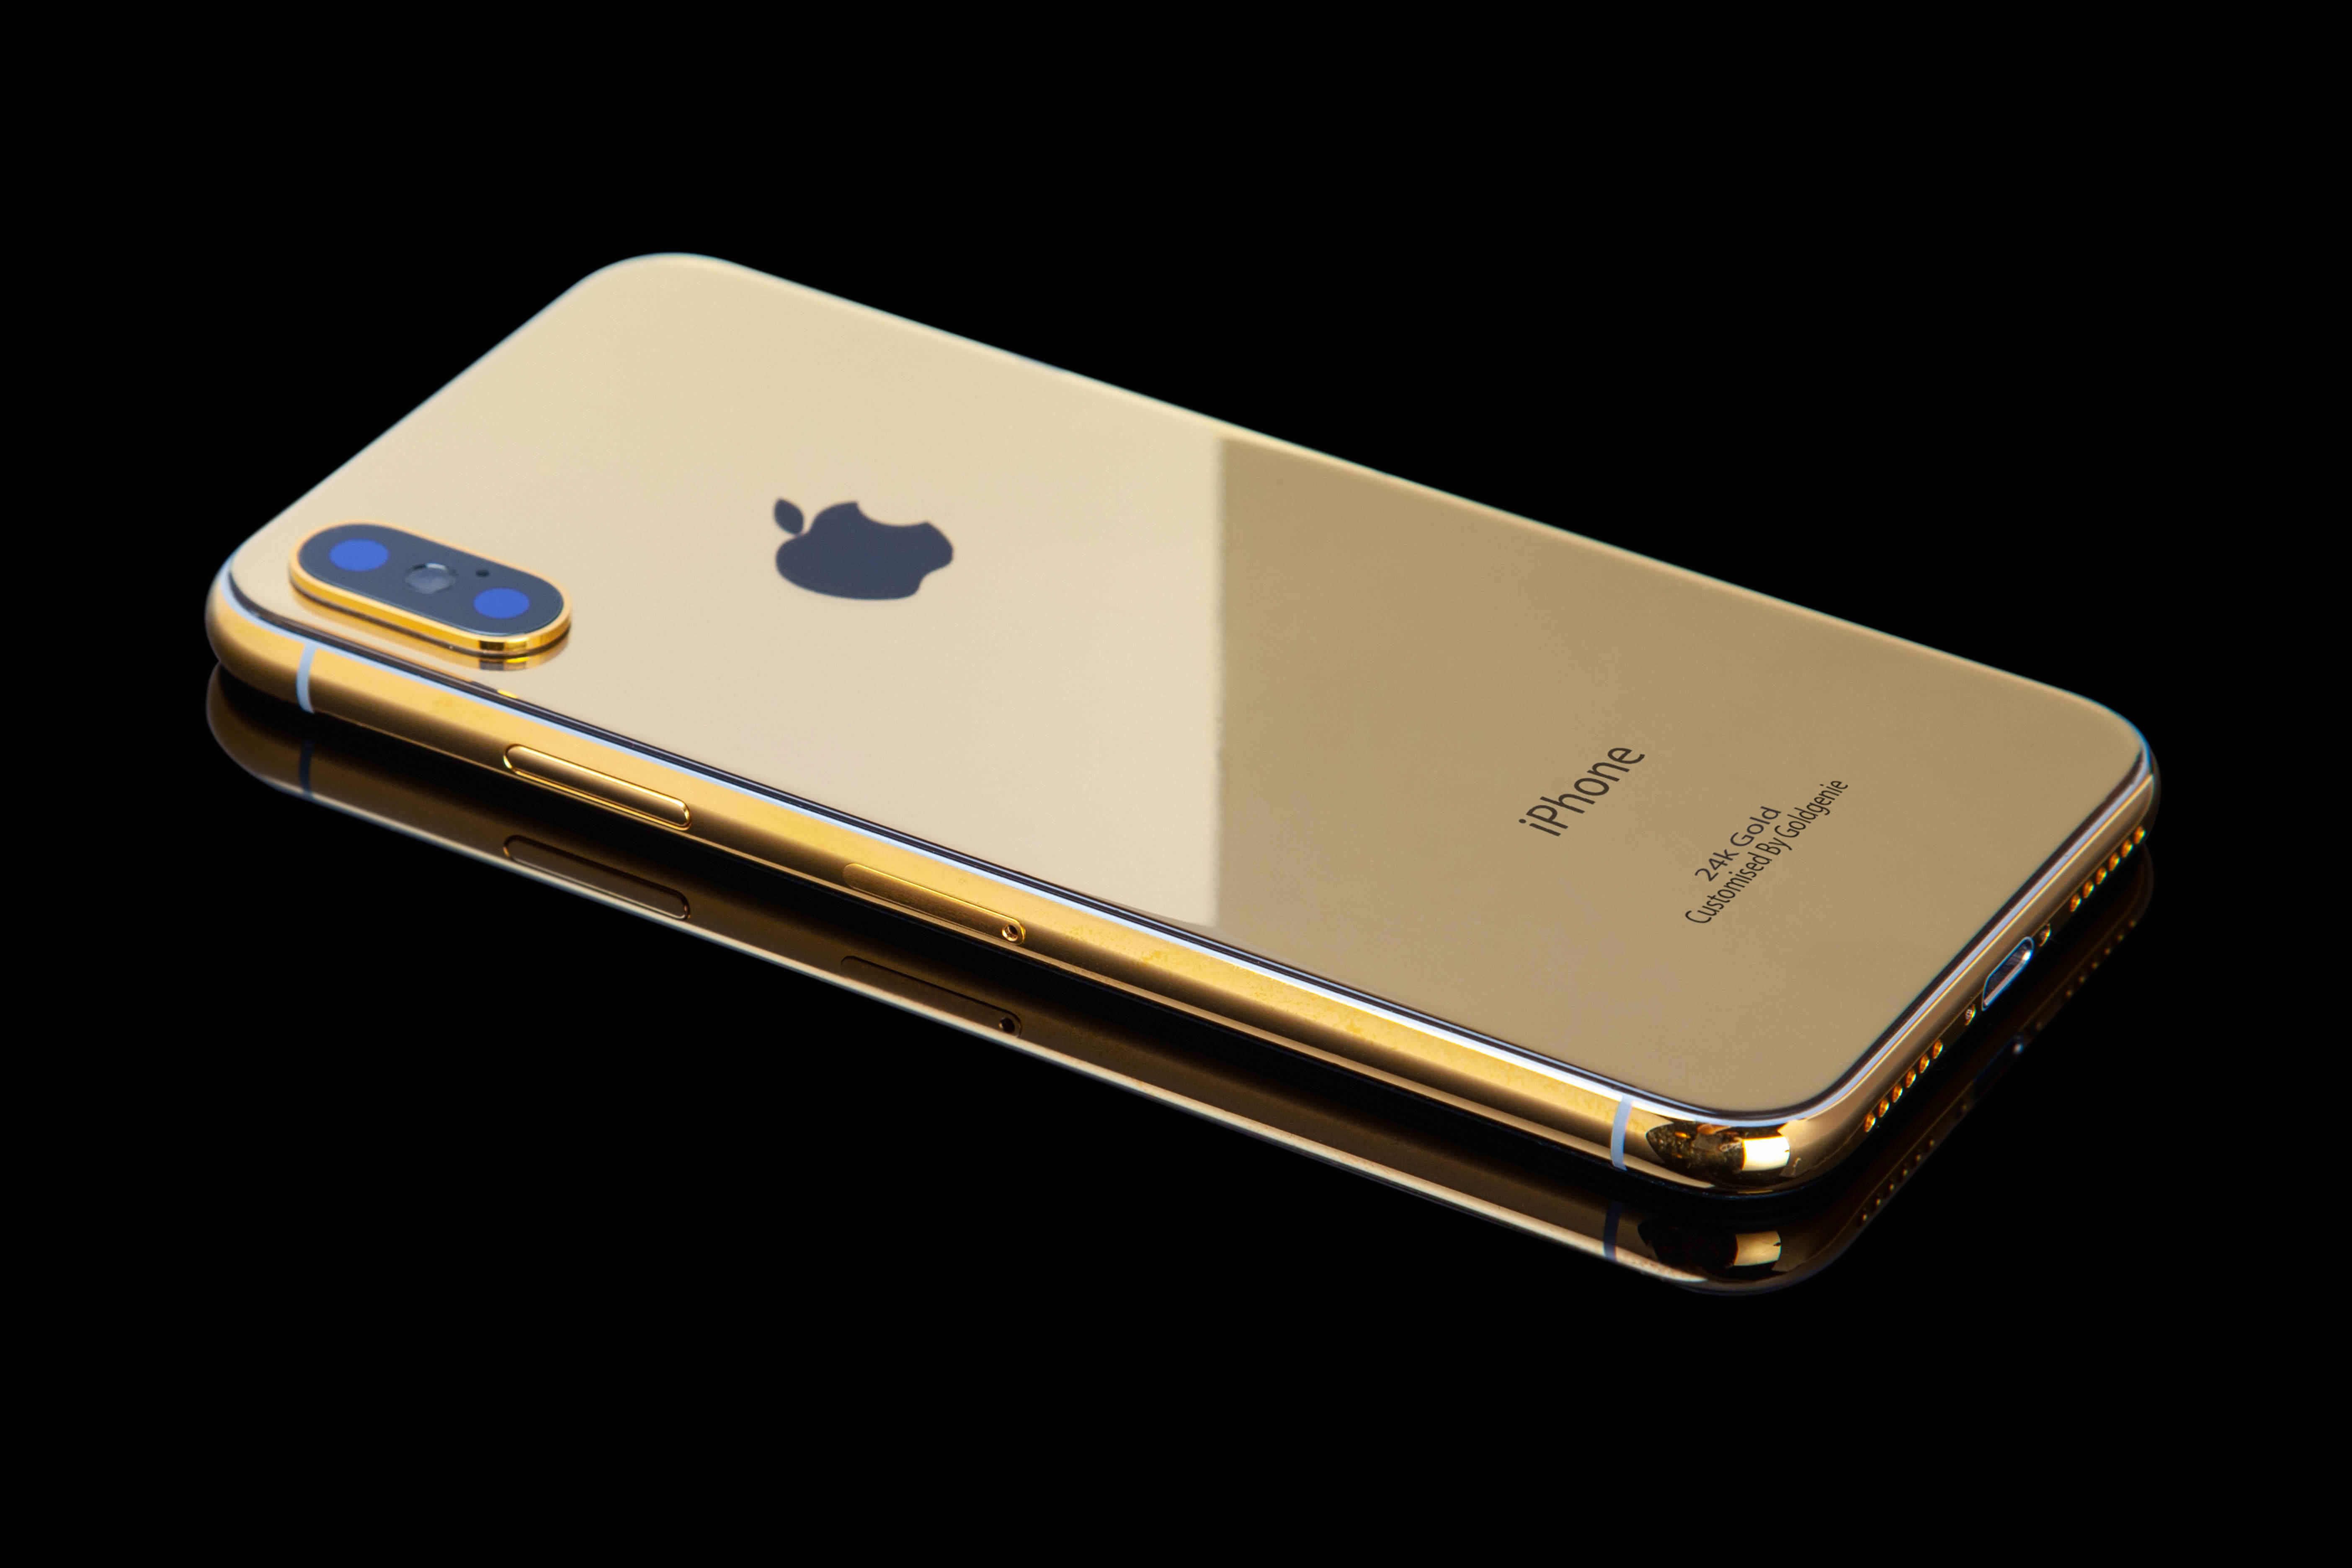 Gold iPhone Xs Elite (5.8") - 24k Gold, Rose Gold & Platinum Editions ...